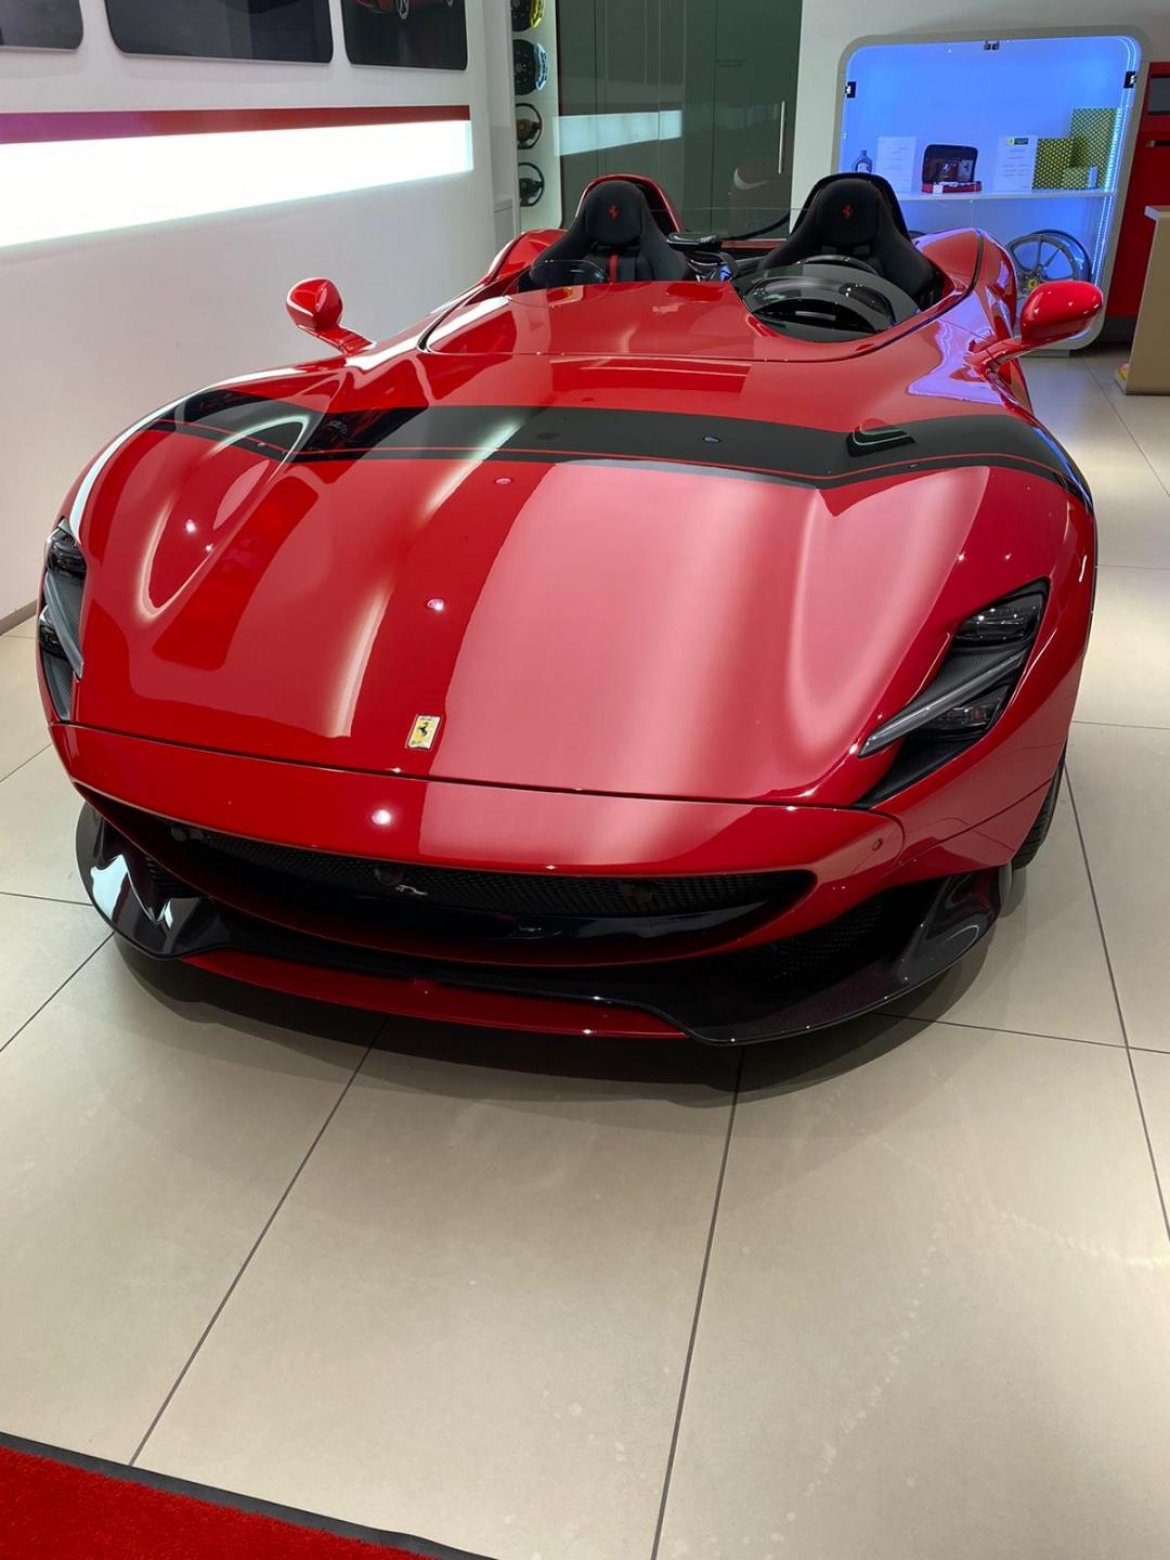 New 2020 Ferrari Monza Sp2 For Sale In Oaklyn Nj Ws 13202 We Sell Limos